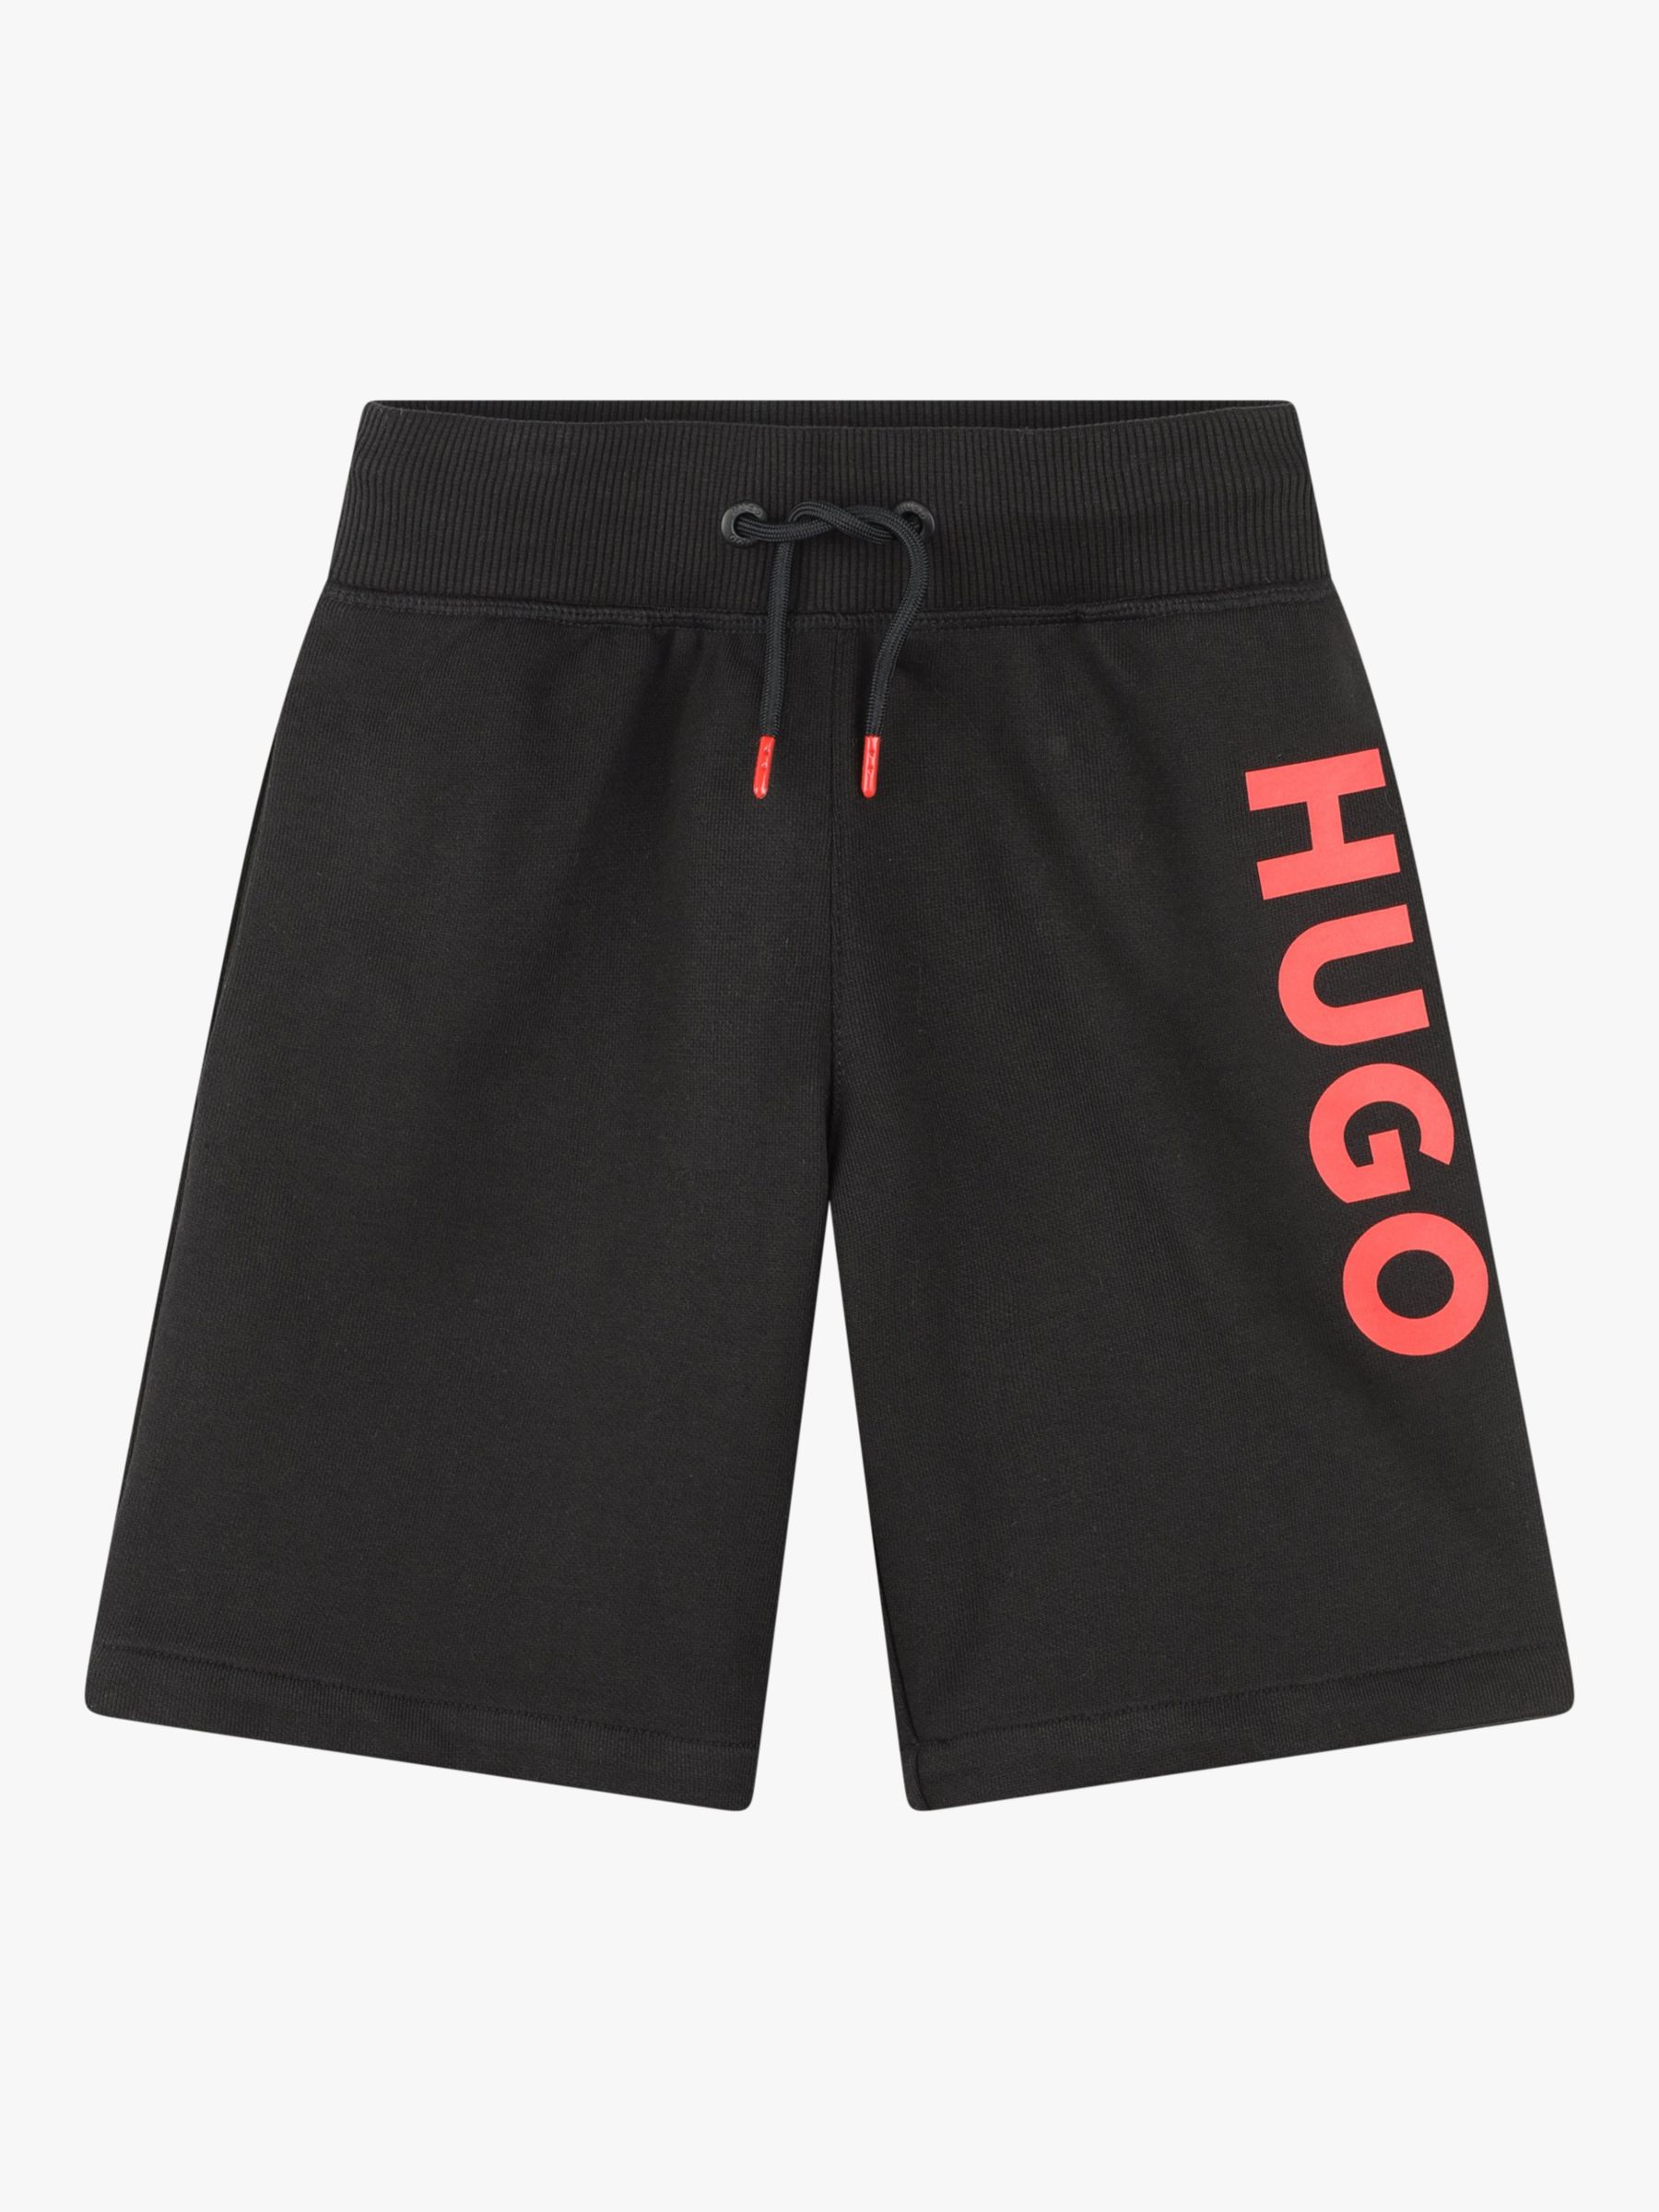 HUGO Kids' French Terry Drawstring Shorts, Black/Red, 4 years